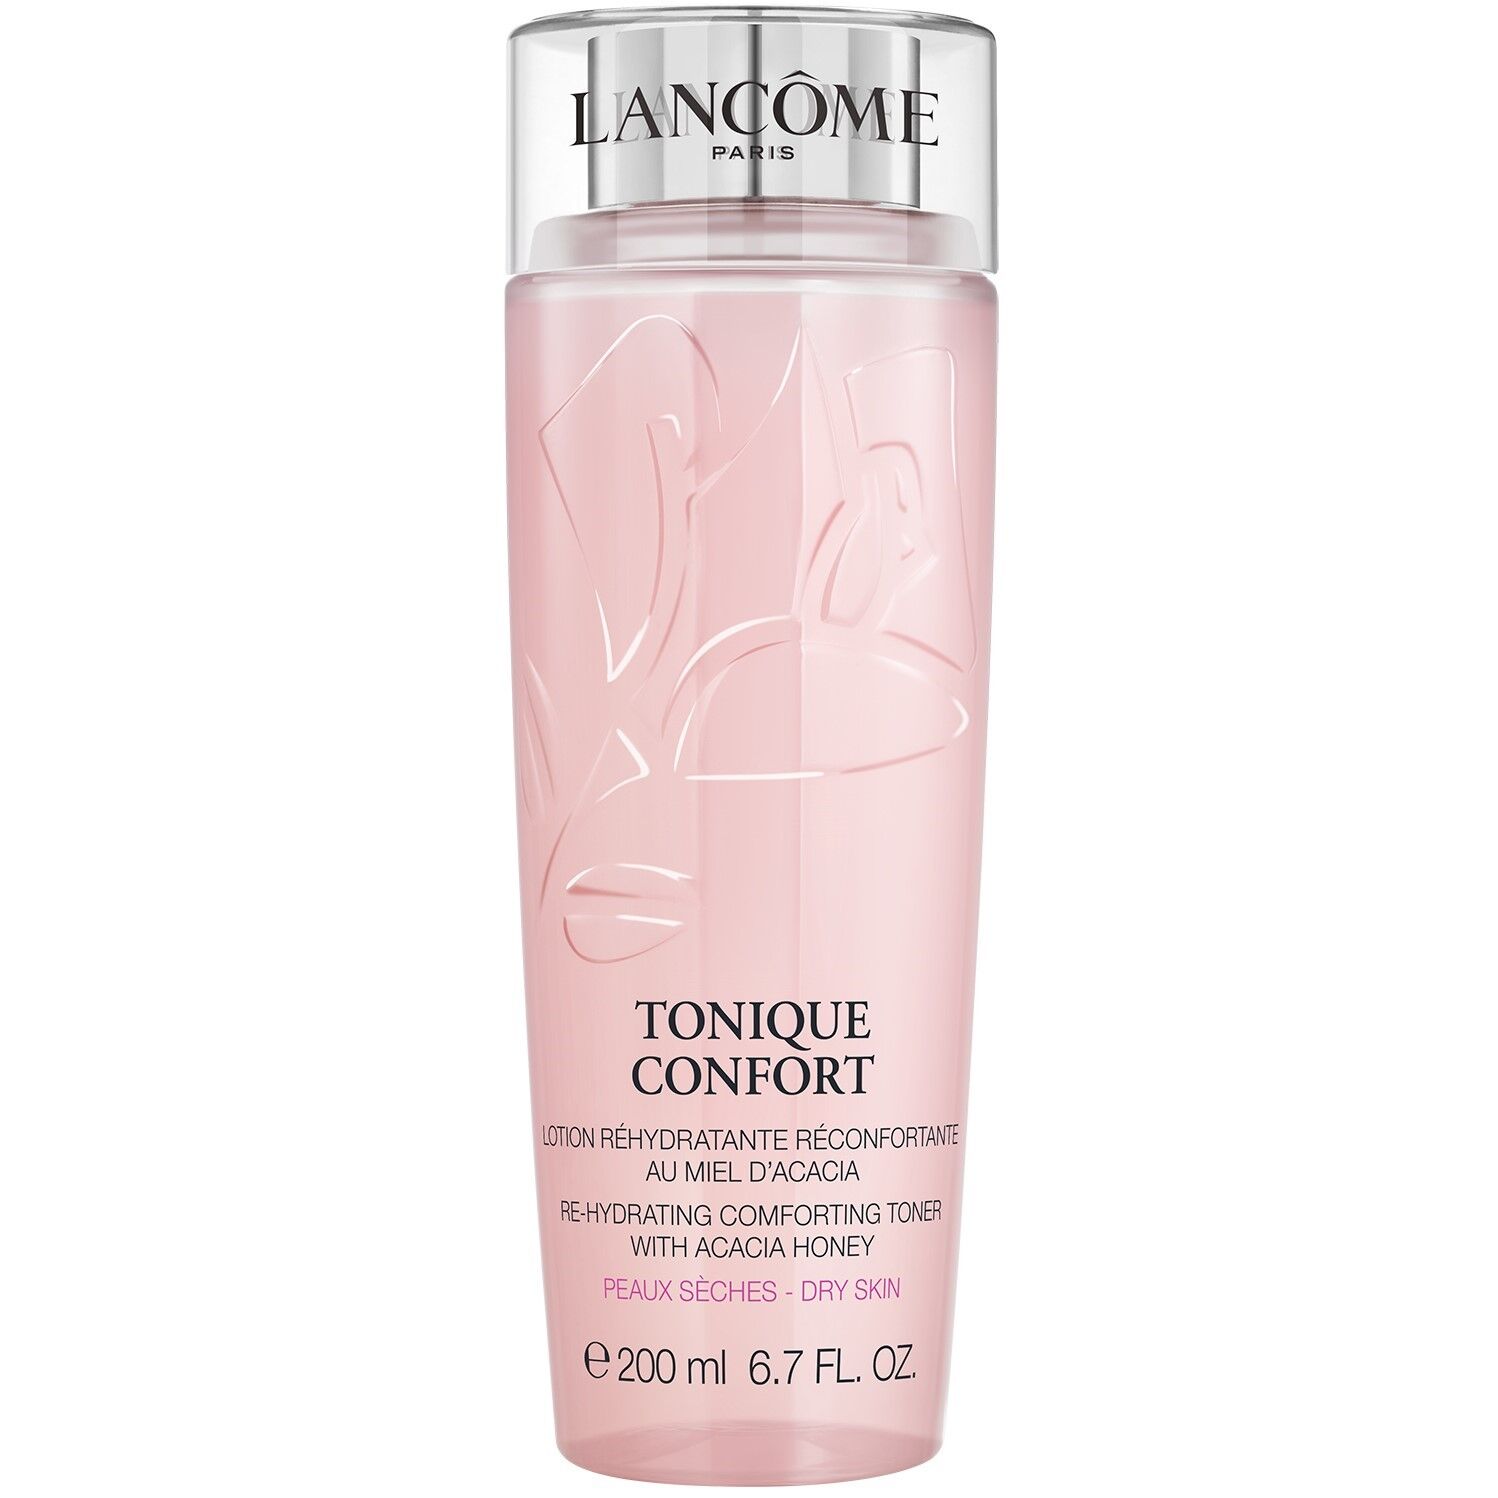 Lancôme Tonique Confort Tónico rehidratante para pieles secas 200mL